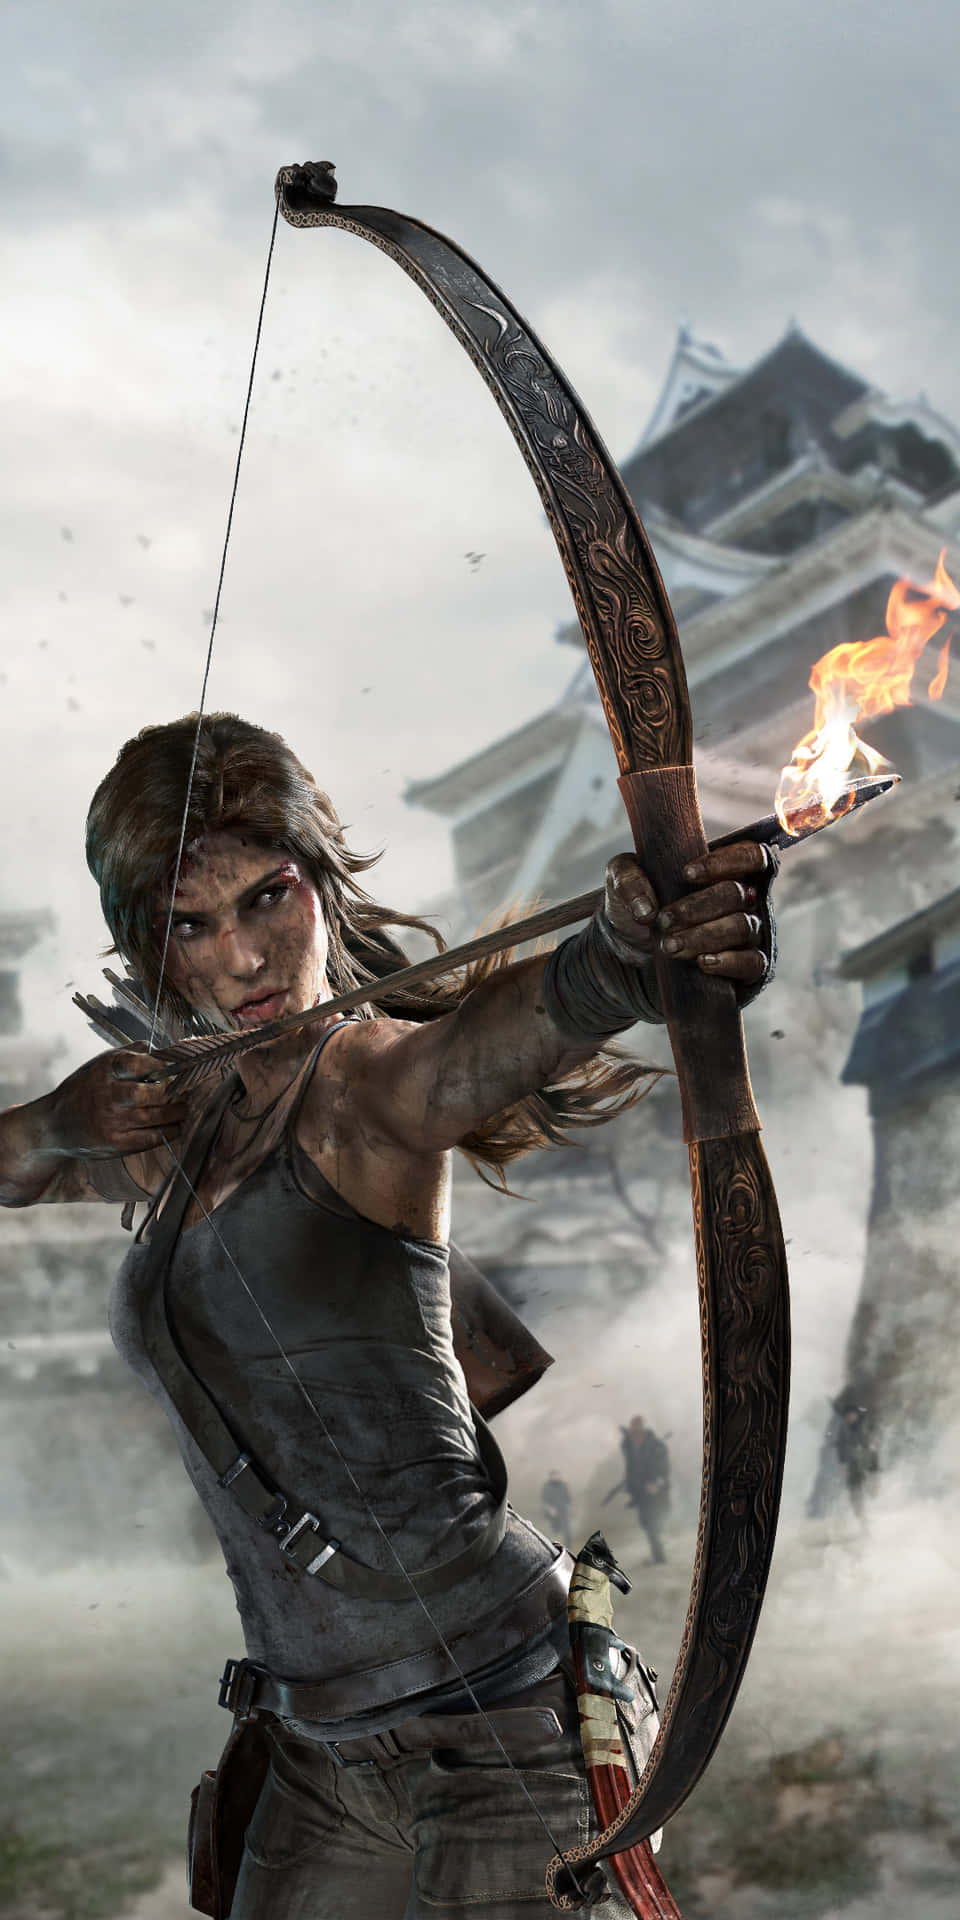 Androidrise Of The Tomb Raider Bakgrund Med Skjutande Vapen.